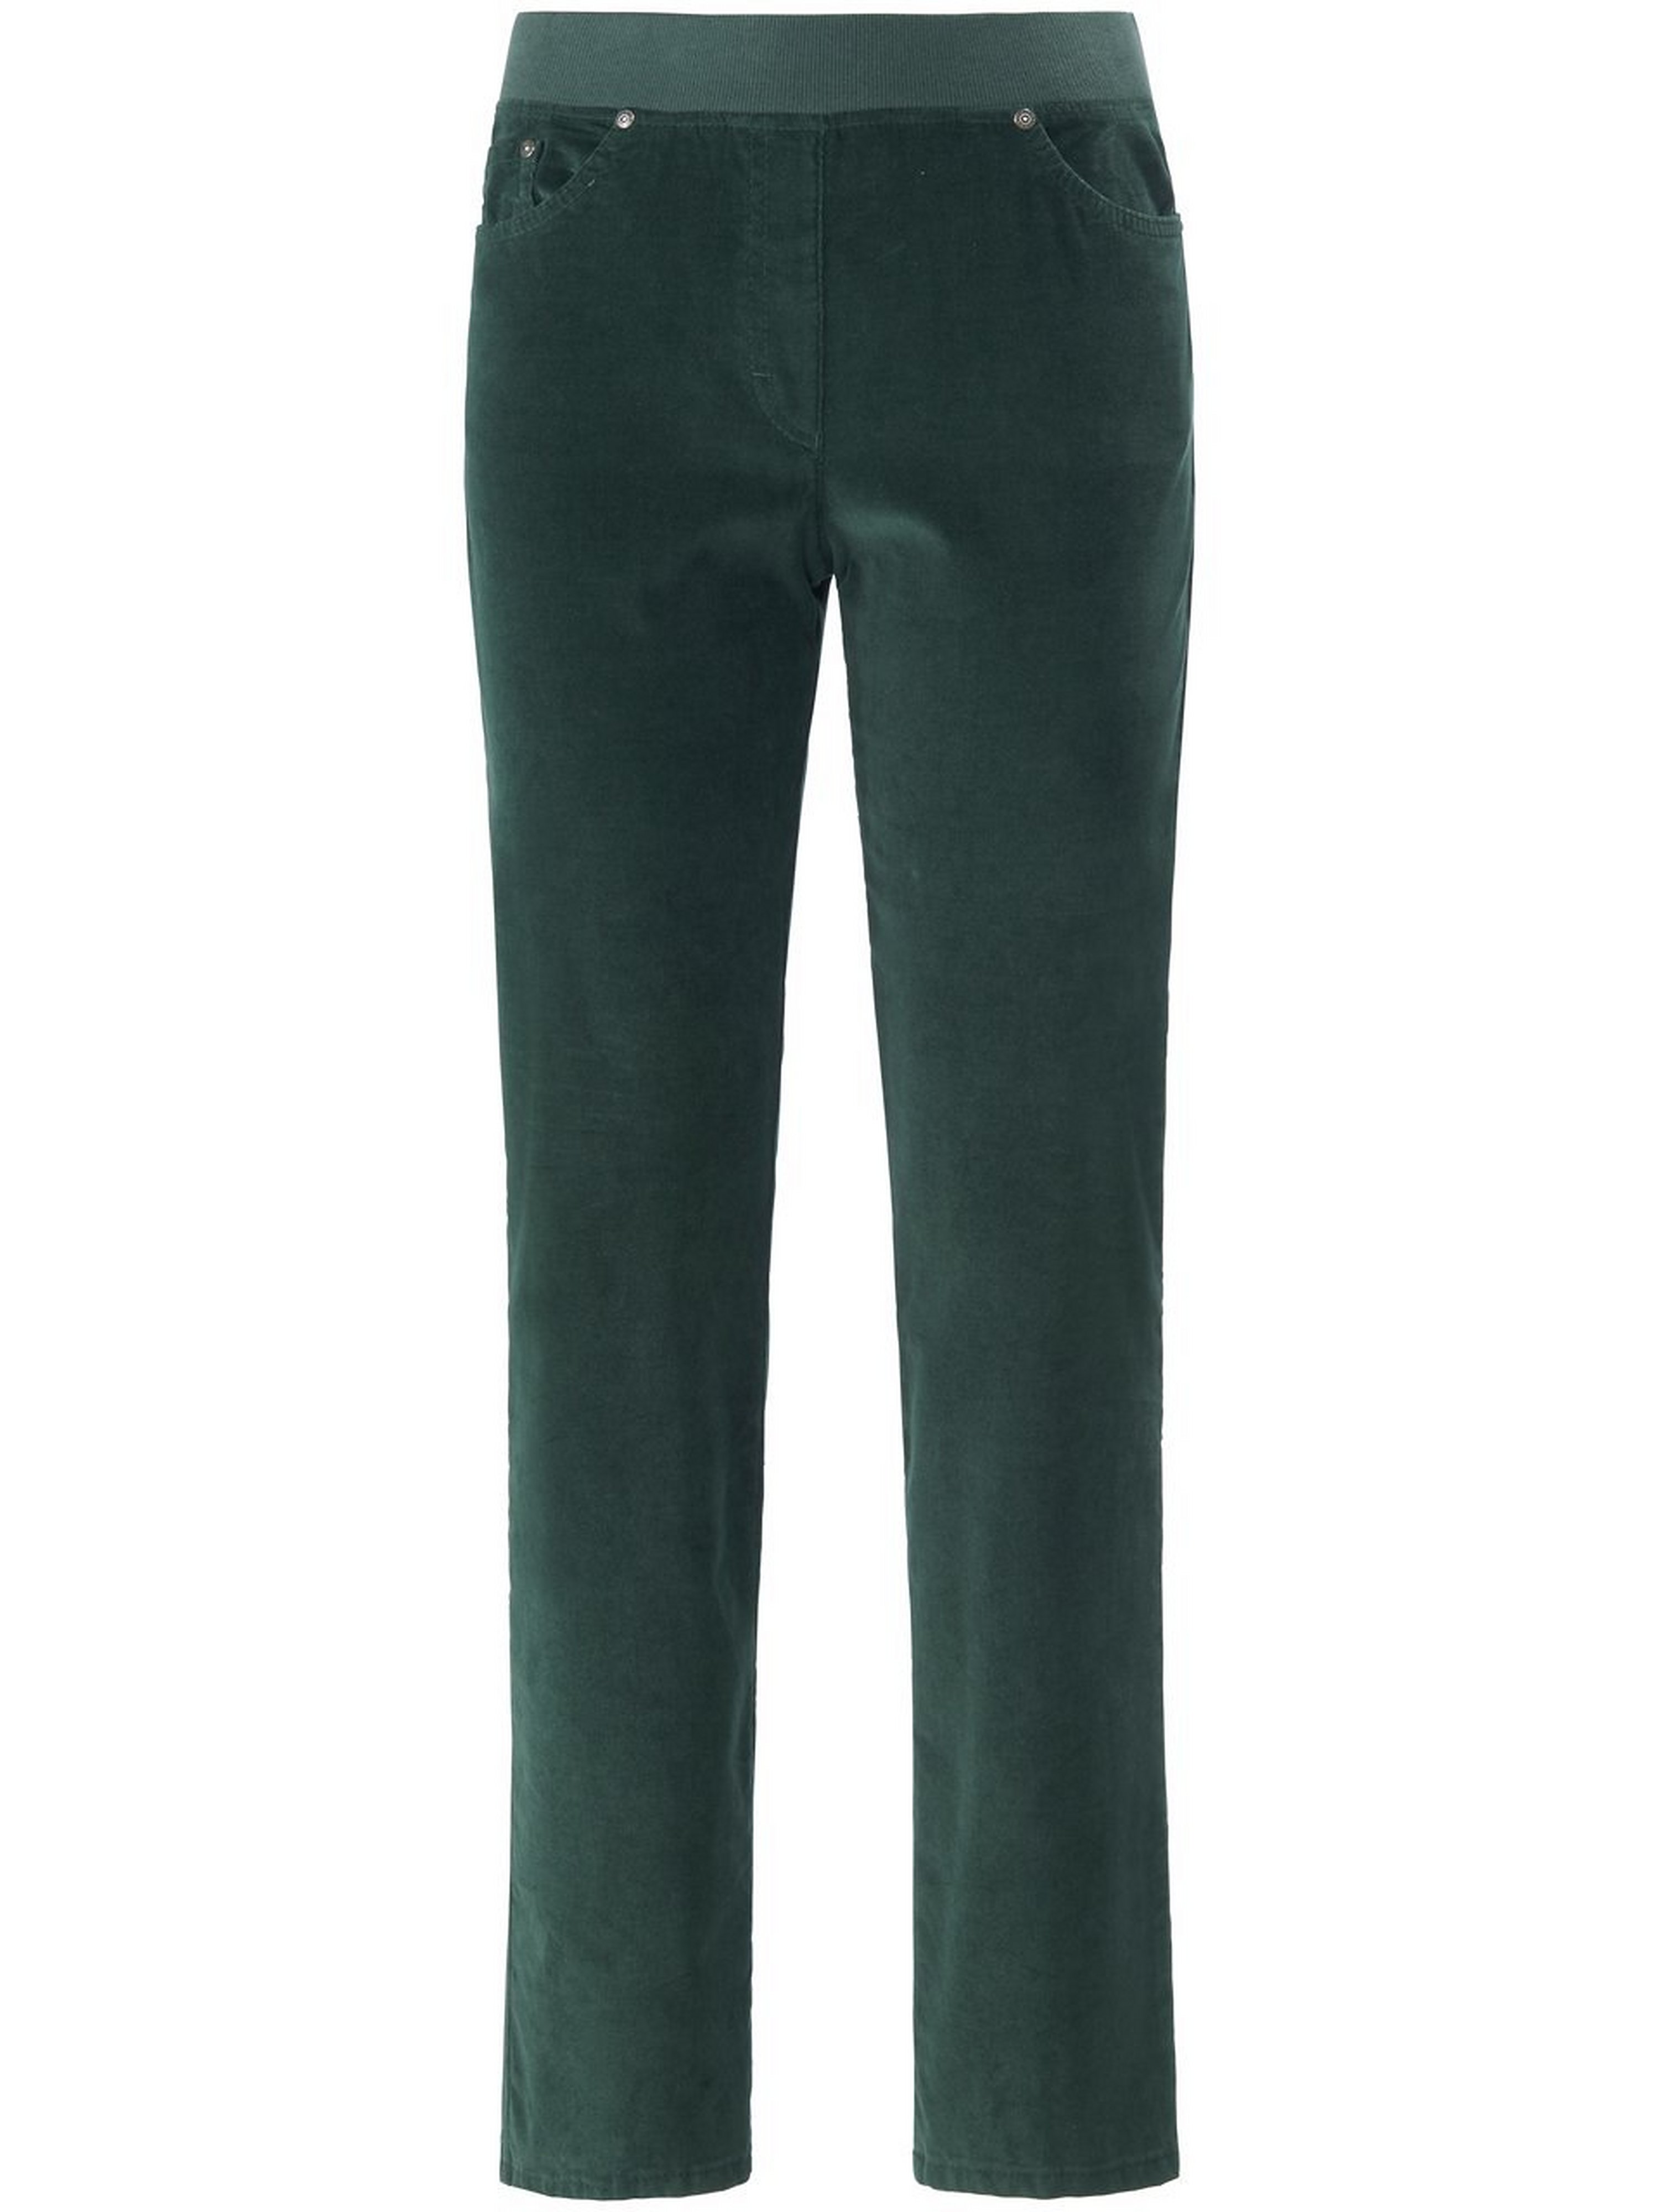 Le pantalon modèle Pamina en velours milleraies  Raphaela by Brax vert